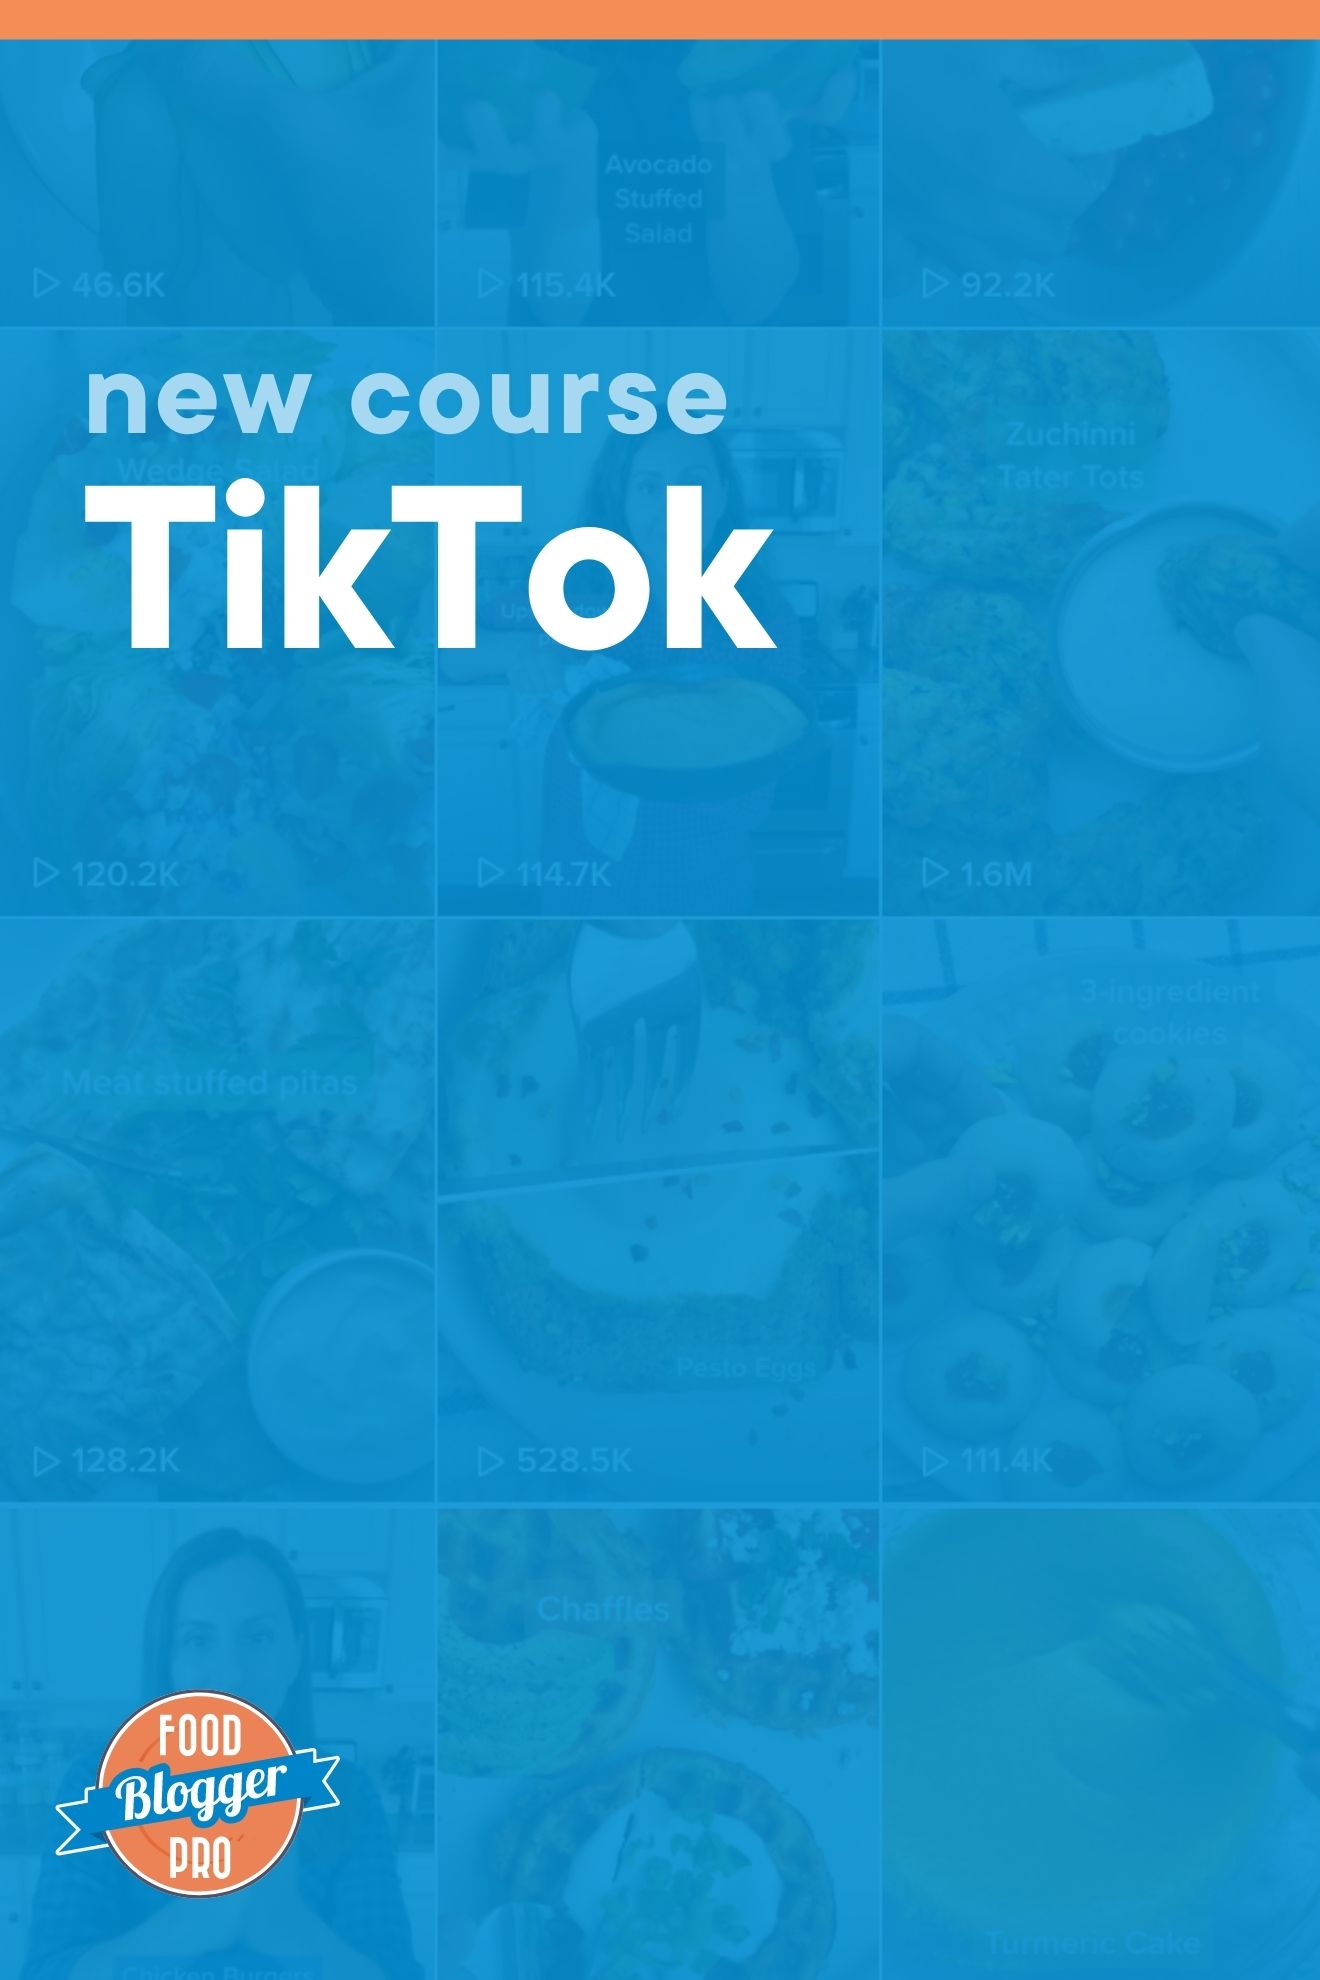 ktv娱乐会所上海金沙江路蓝图Tiktok feed与Food博客Pro标识读新课程TikTok